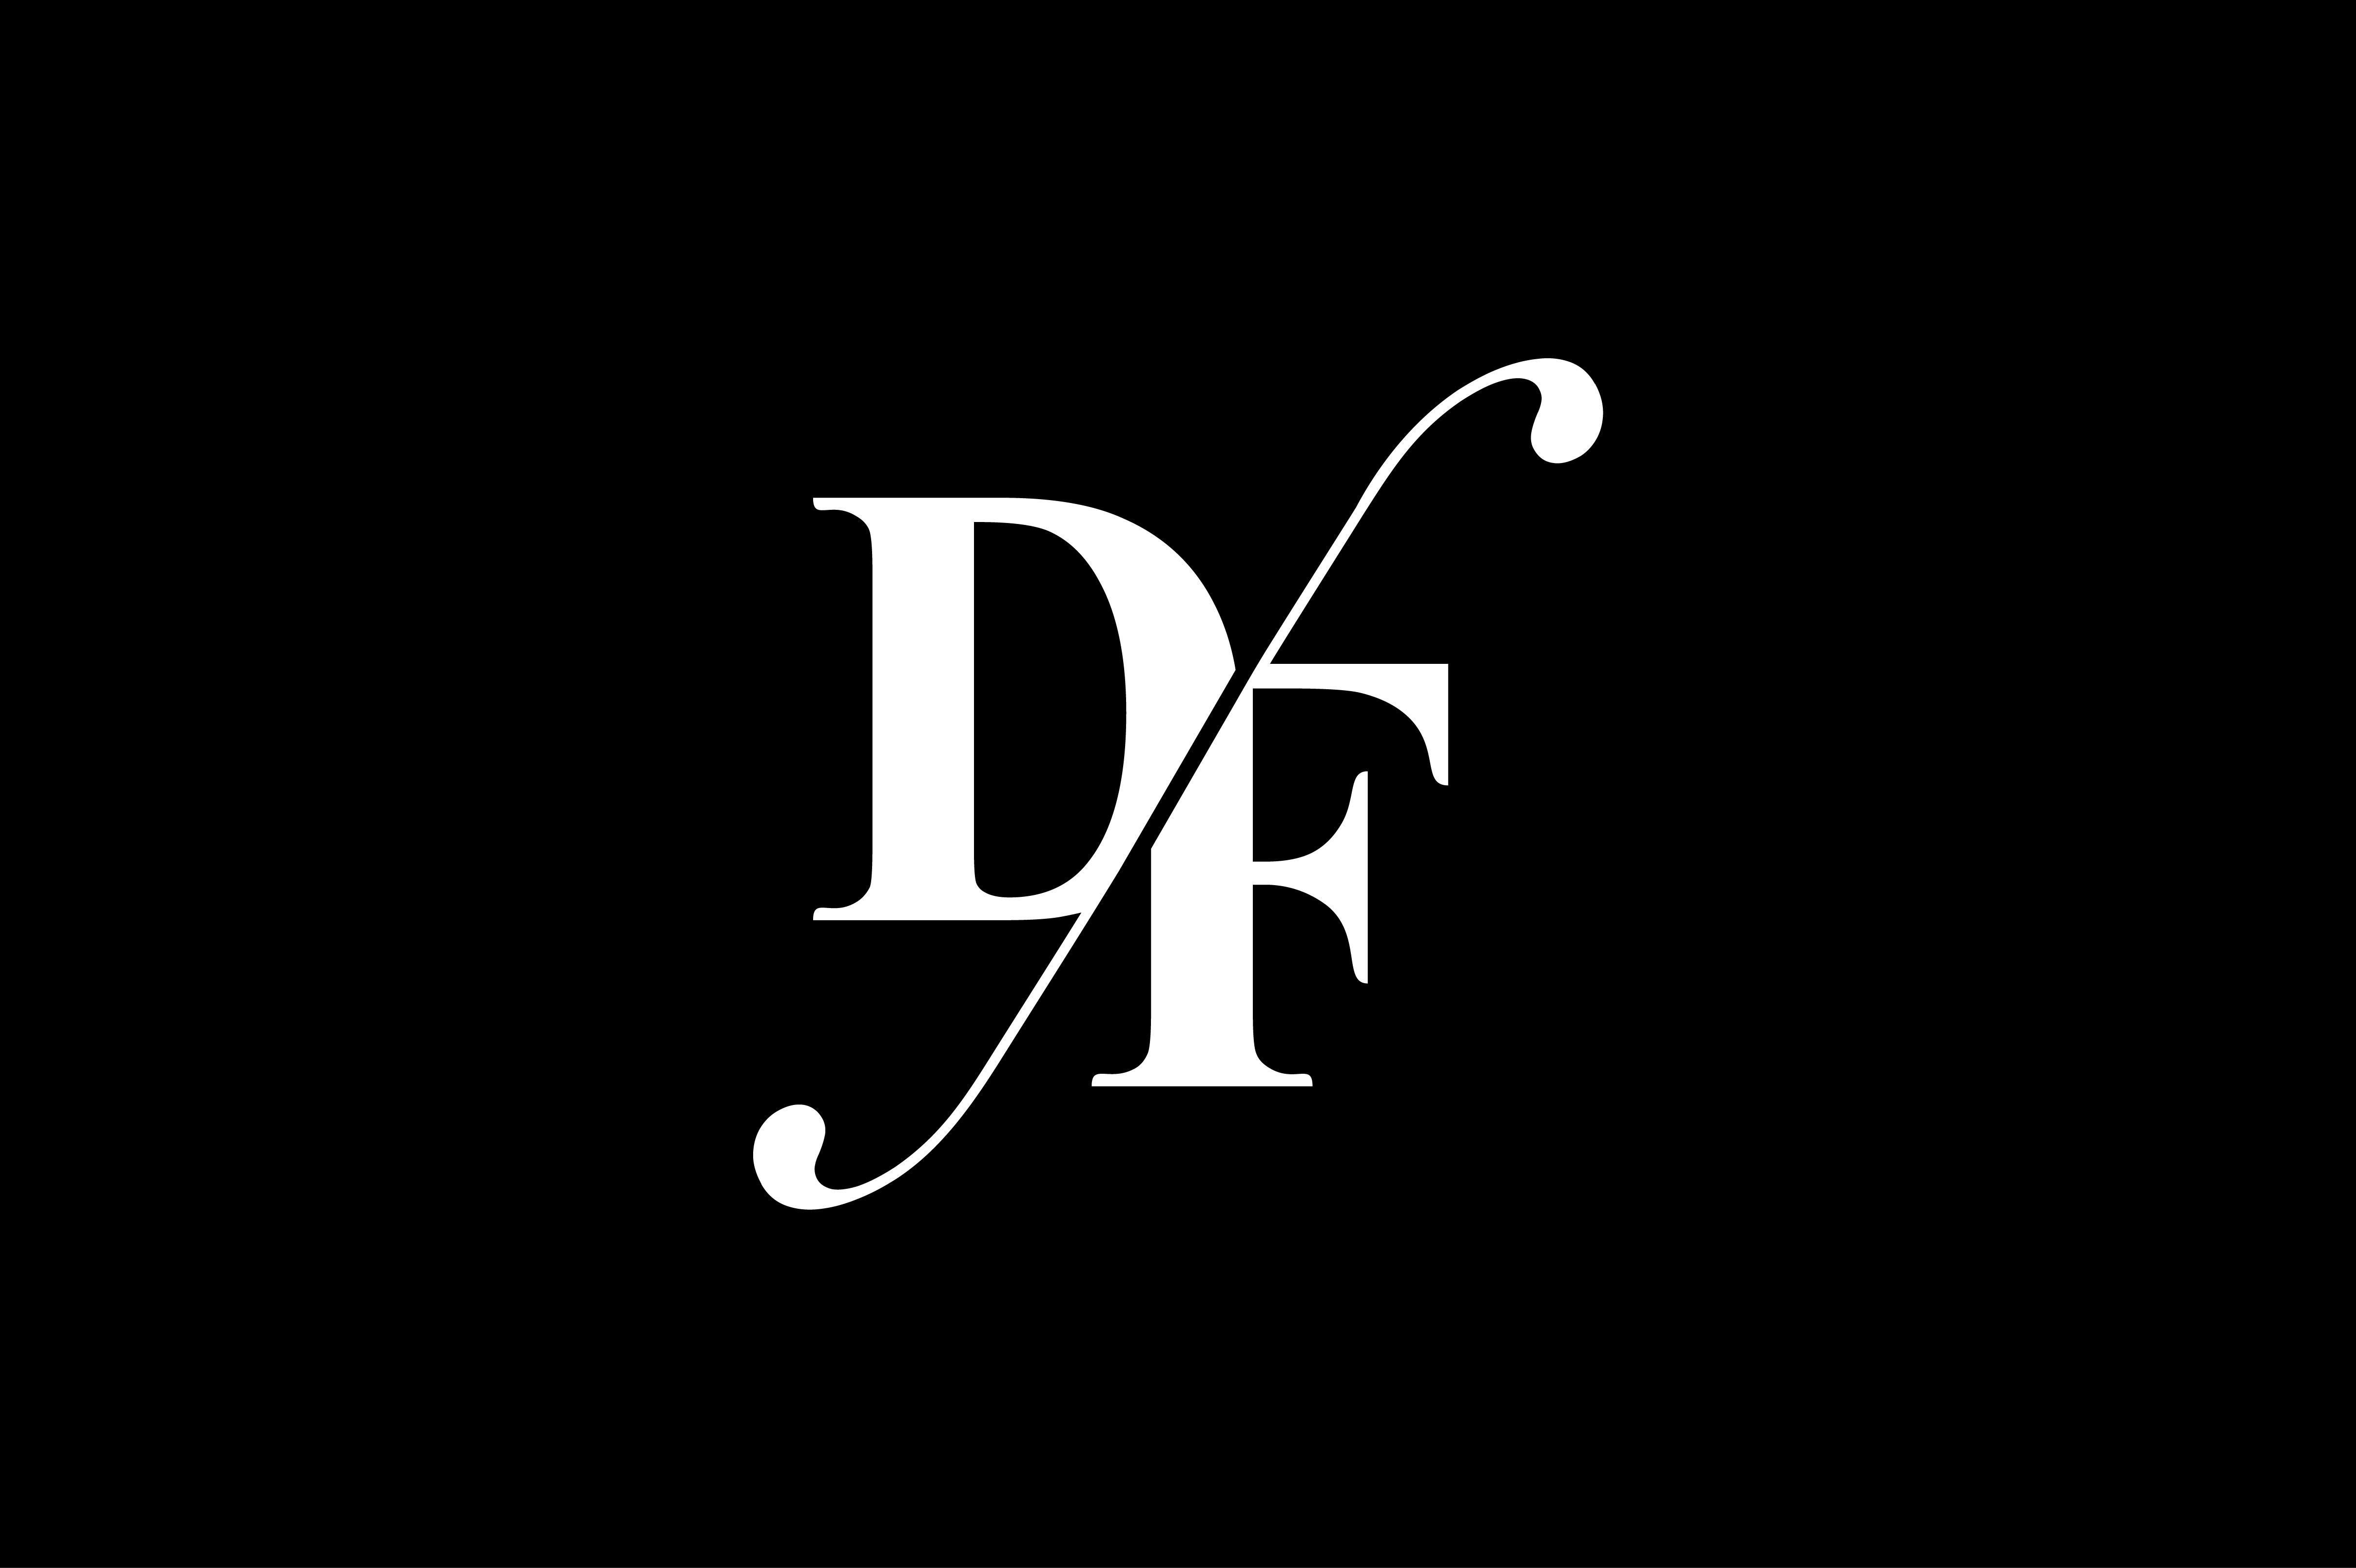 df-monogram-logo-design-by-vectorseller-thehungryjpeg